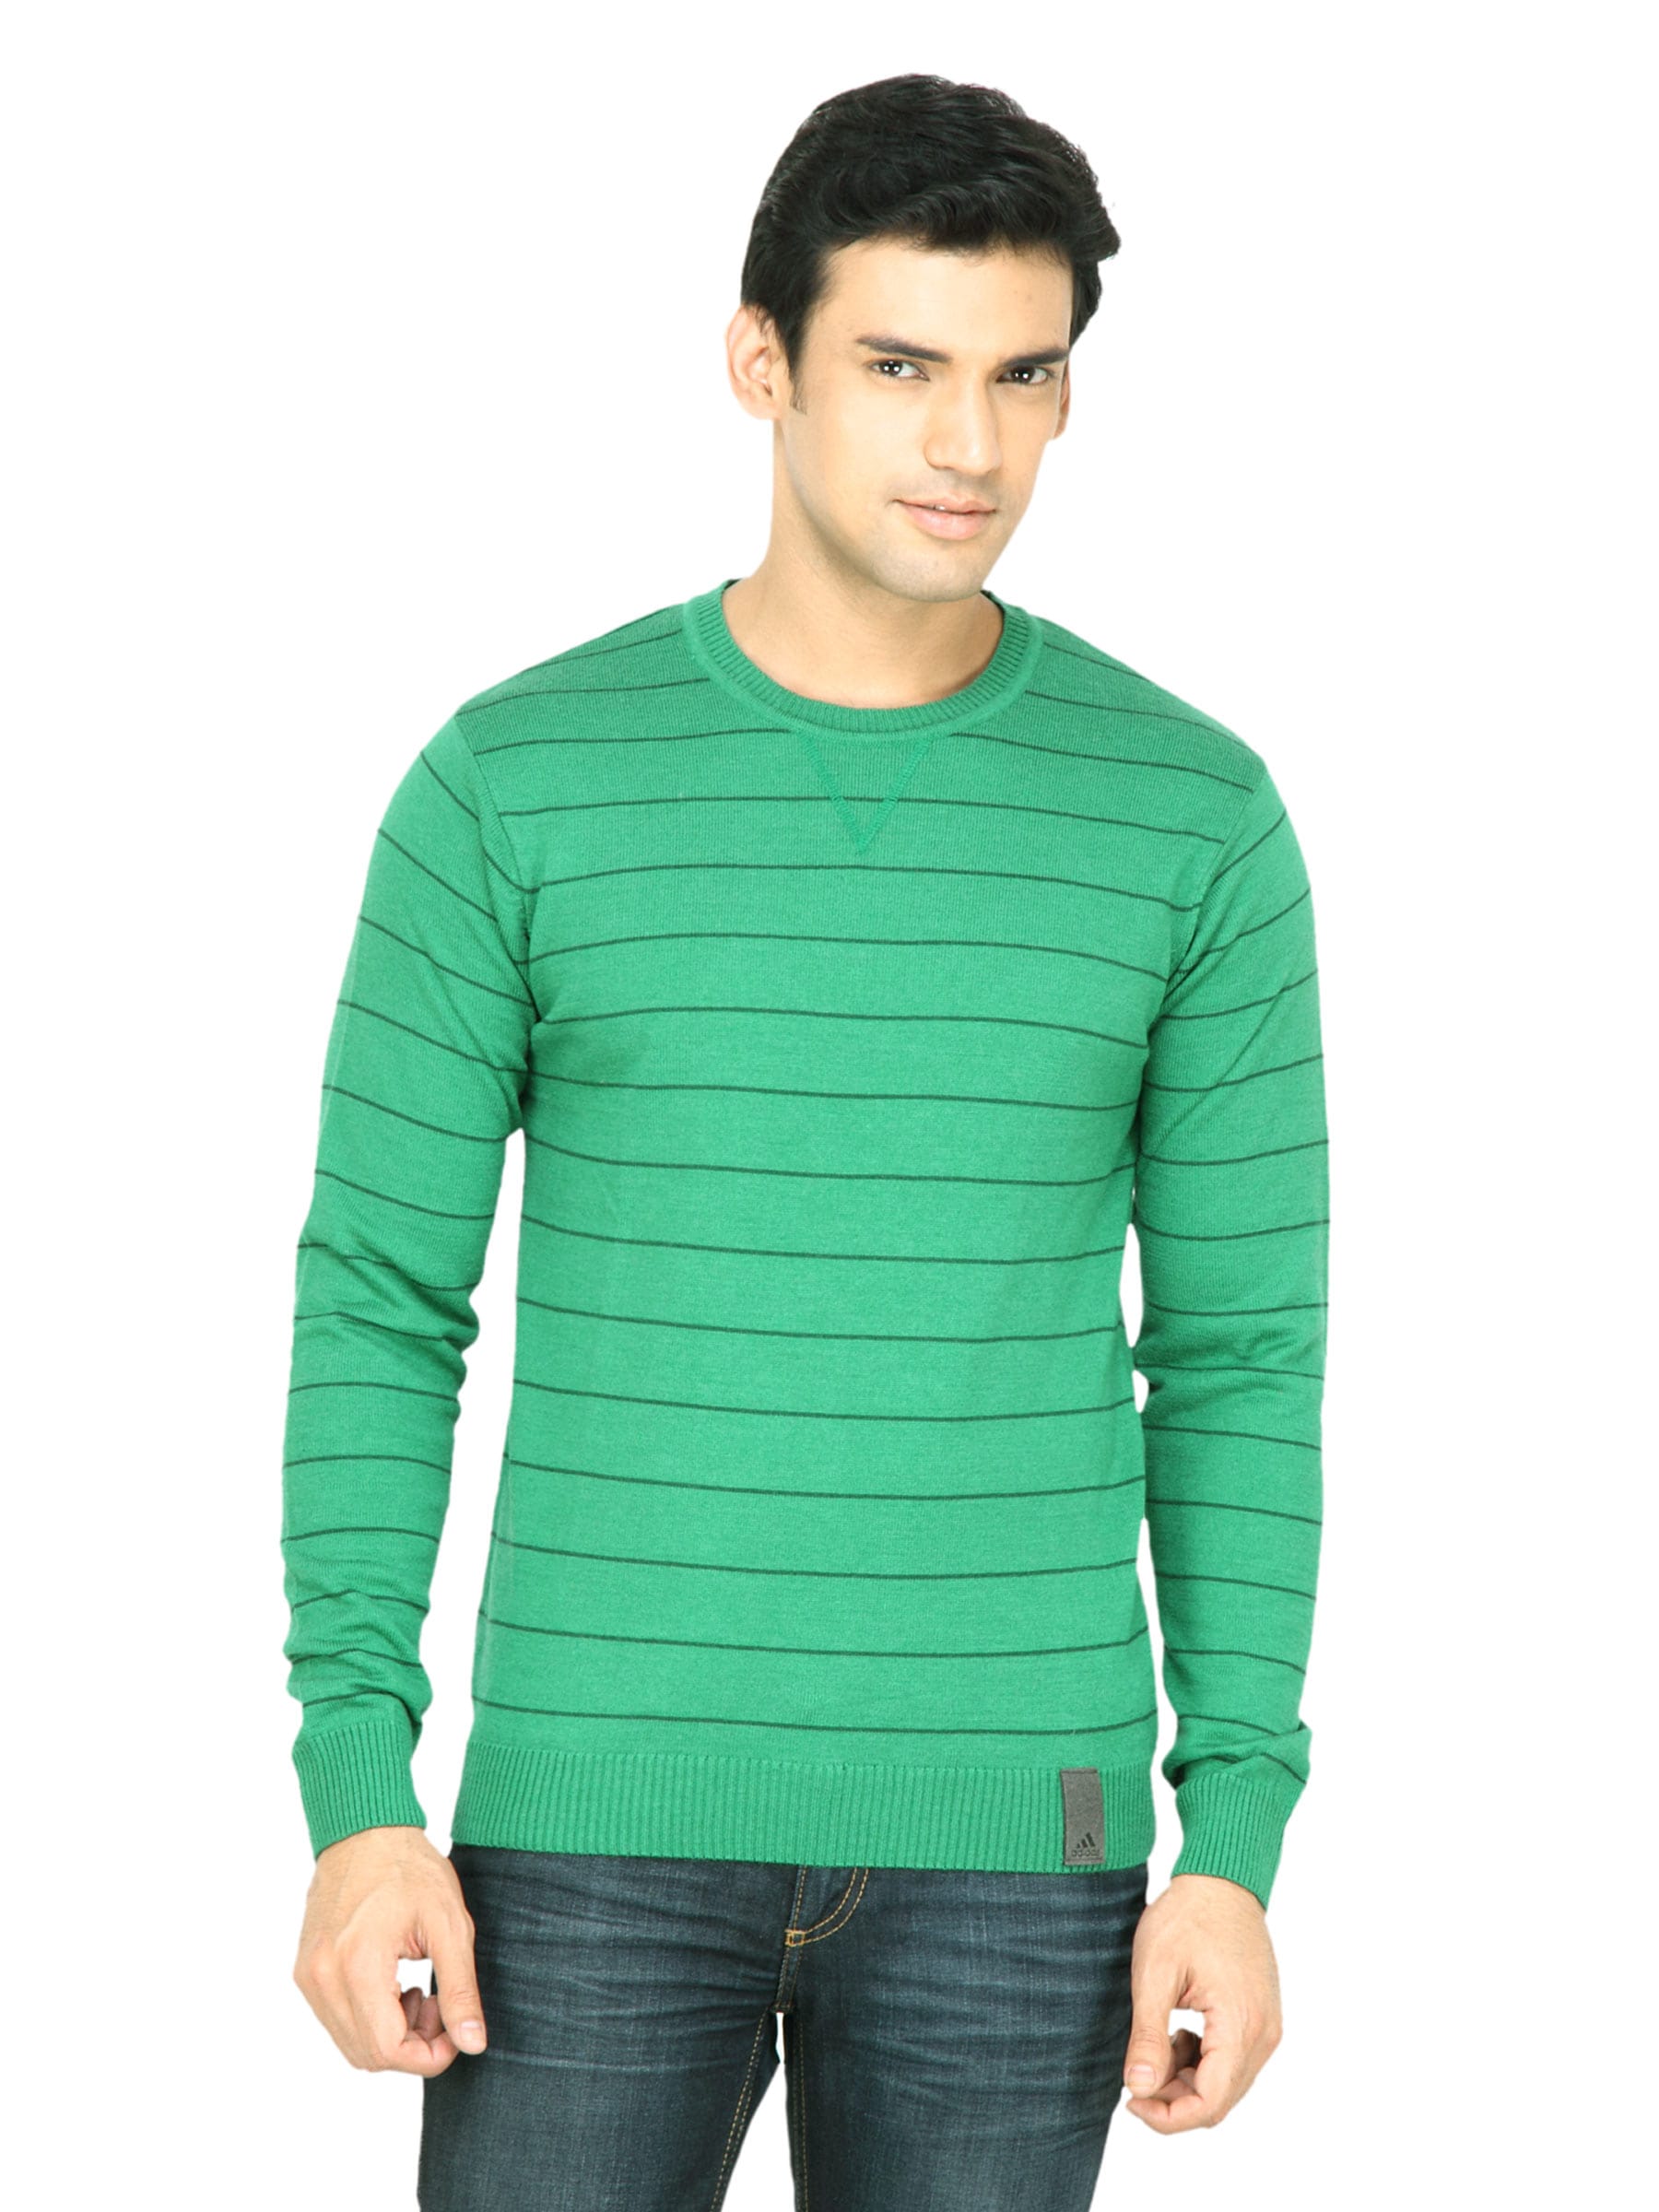 ADIDAS Men Stripes Green Sweater